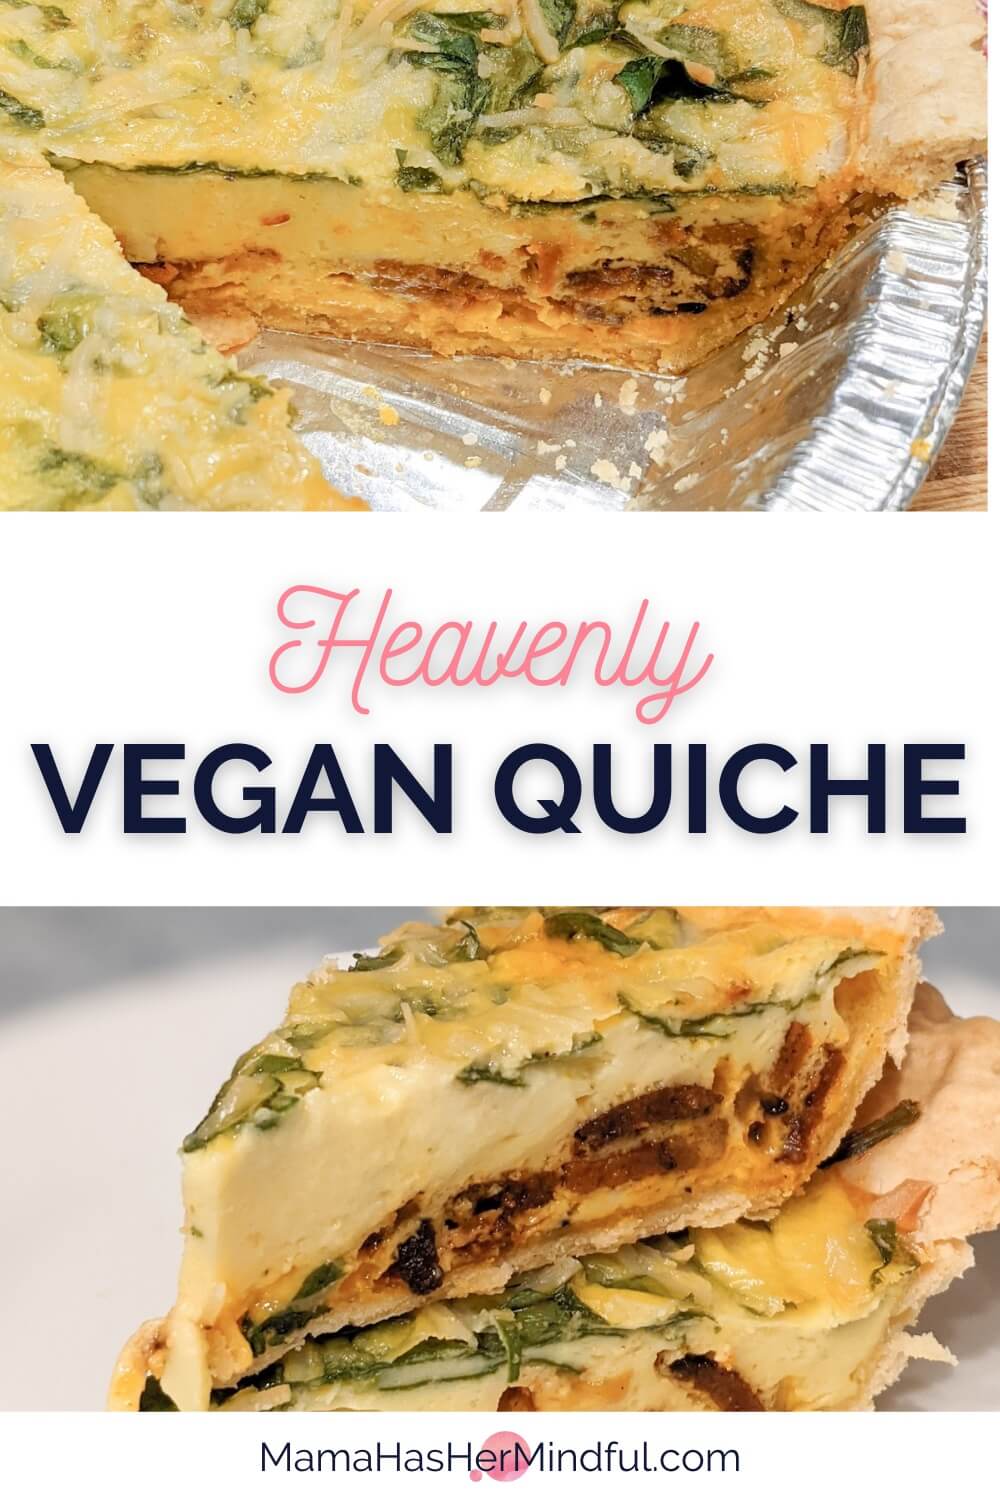 Heavenly JUST Egg Vegan Quiche Recipe